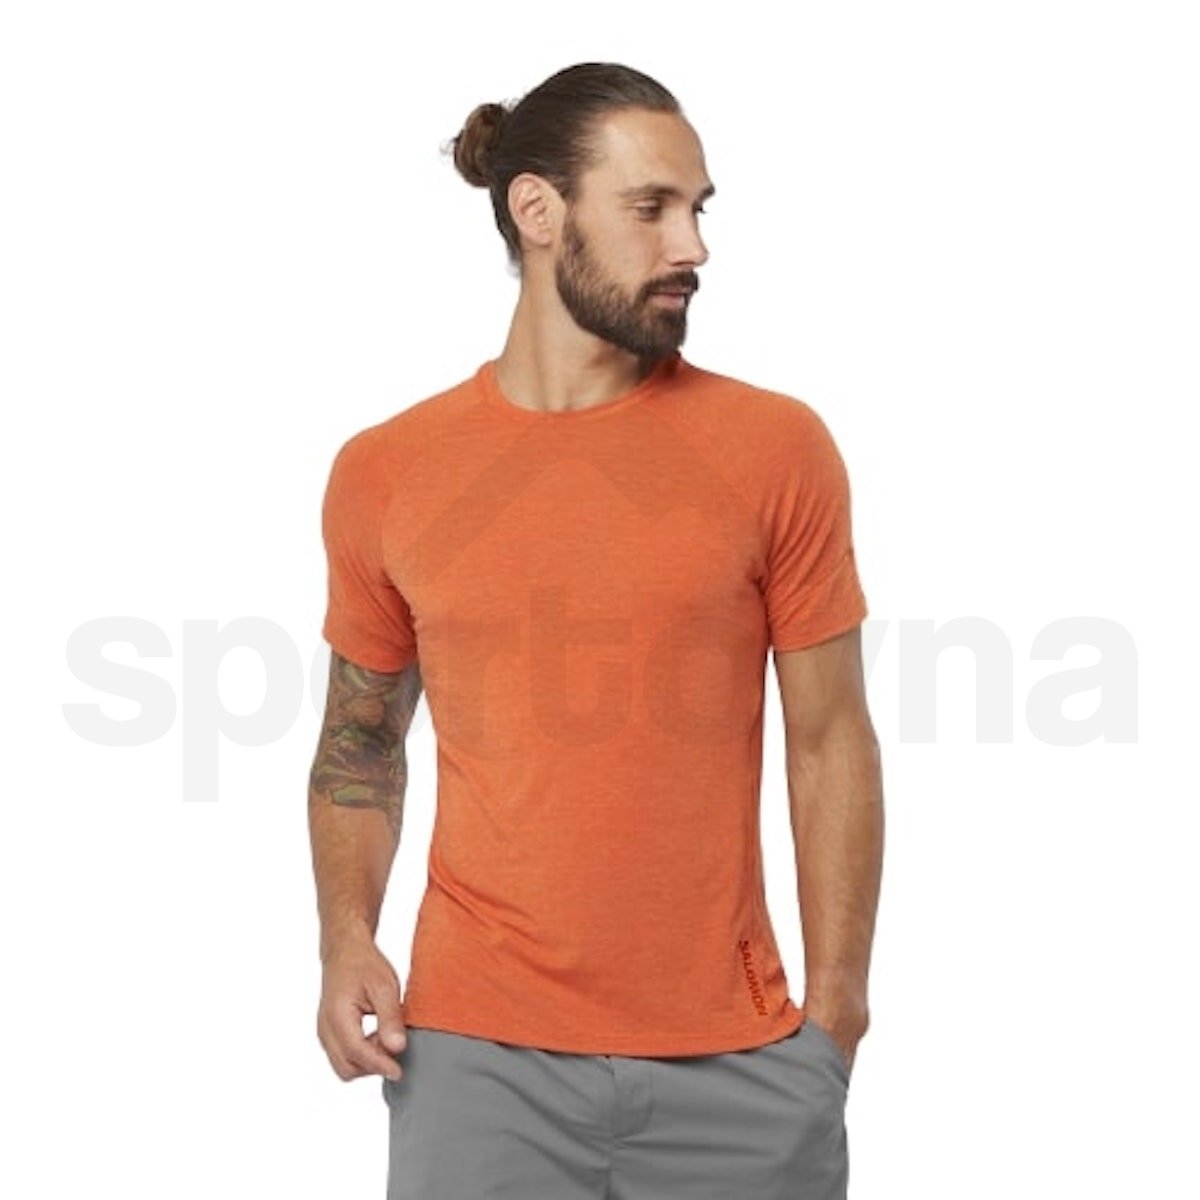 Tričko Salomon Runlife SS Tee M - oranžová